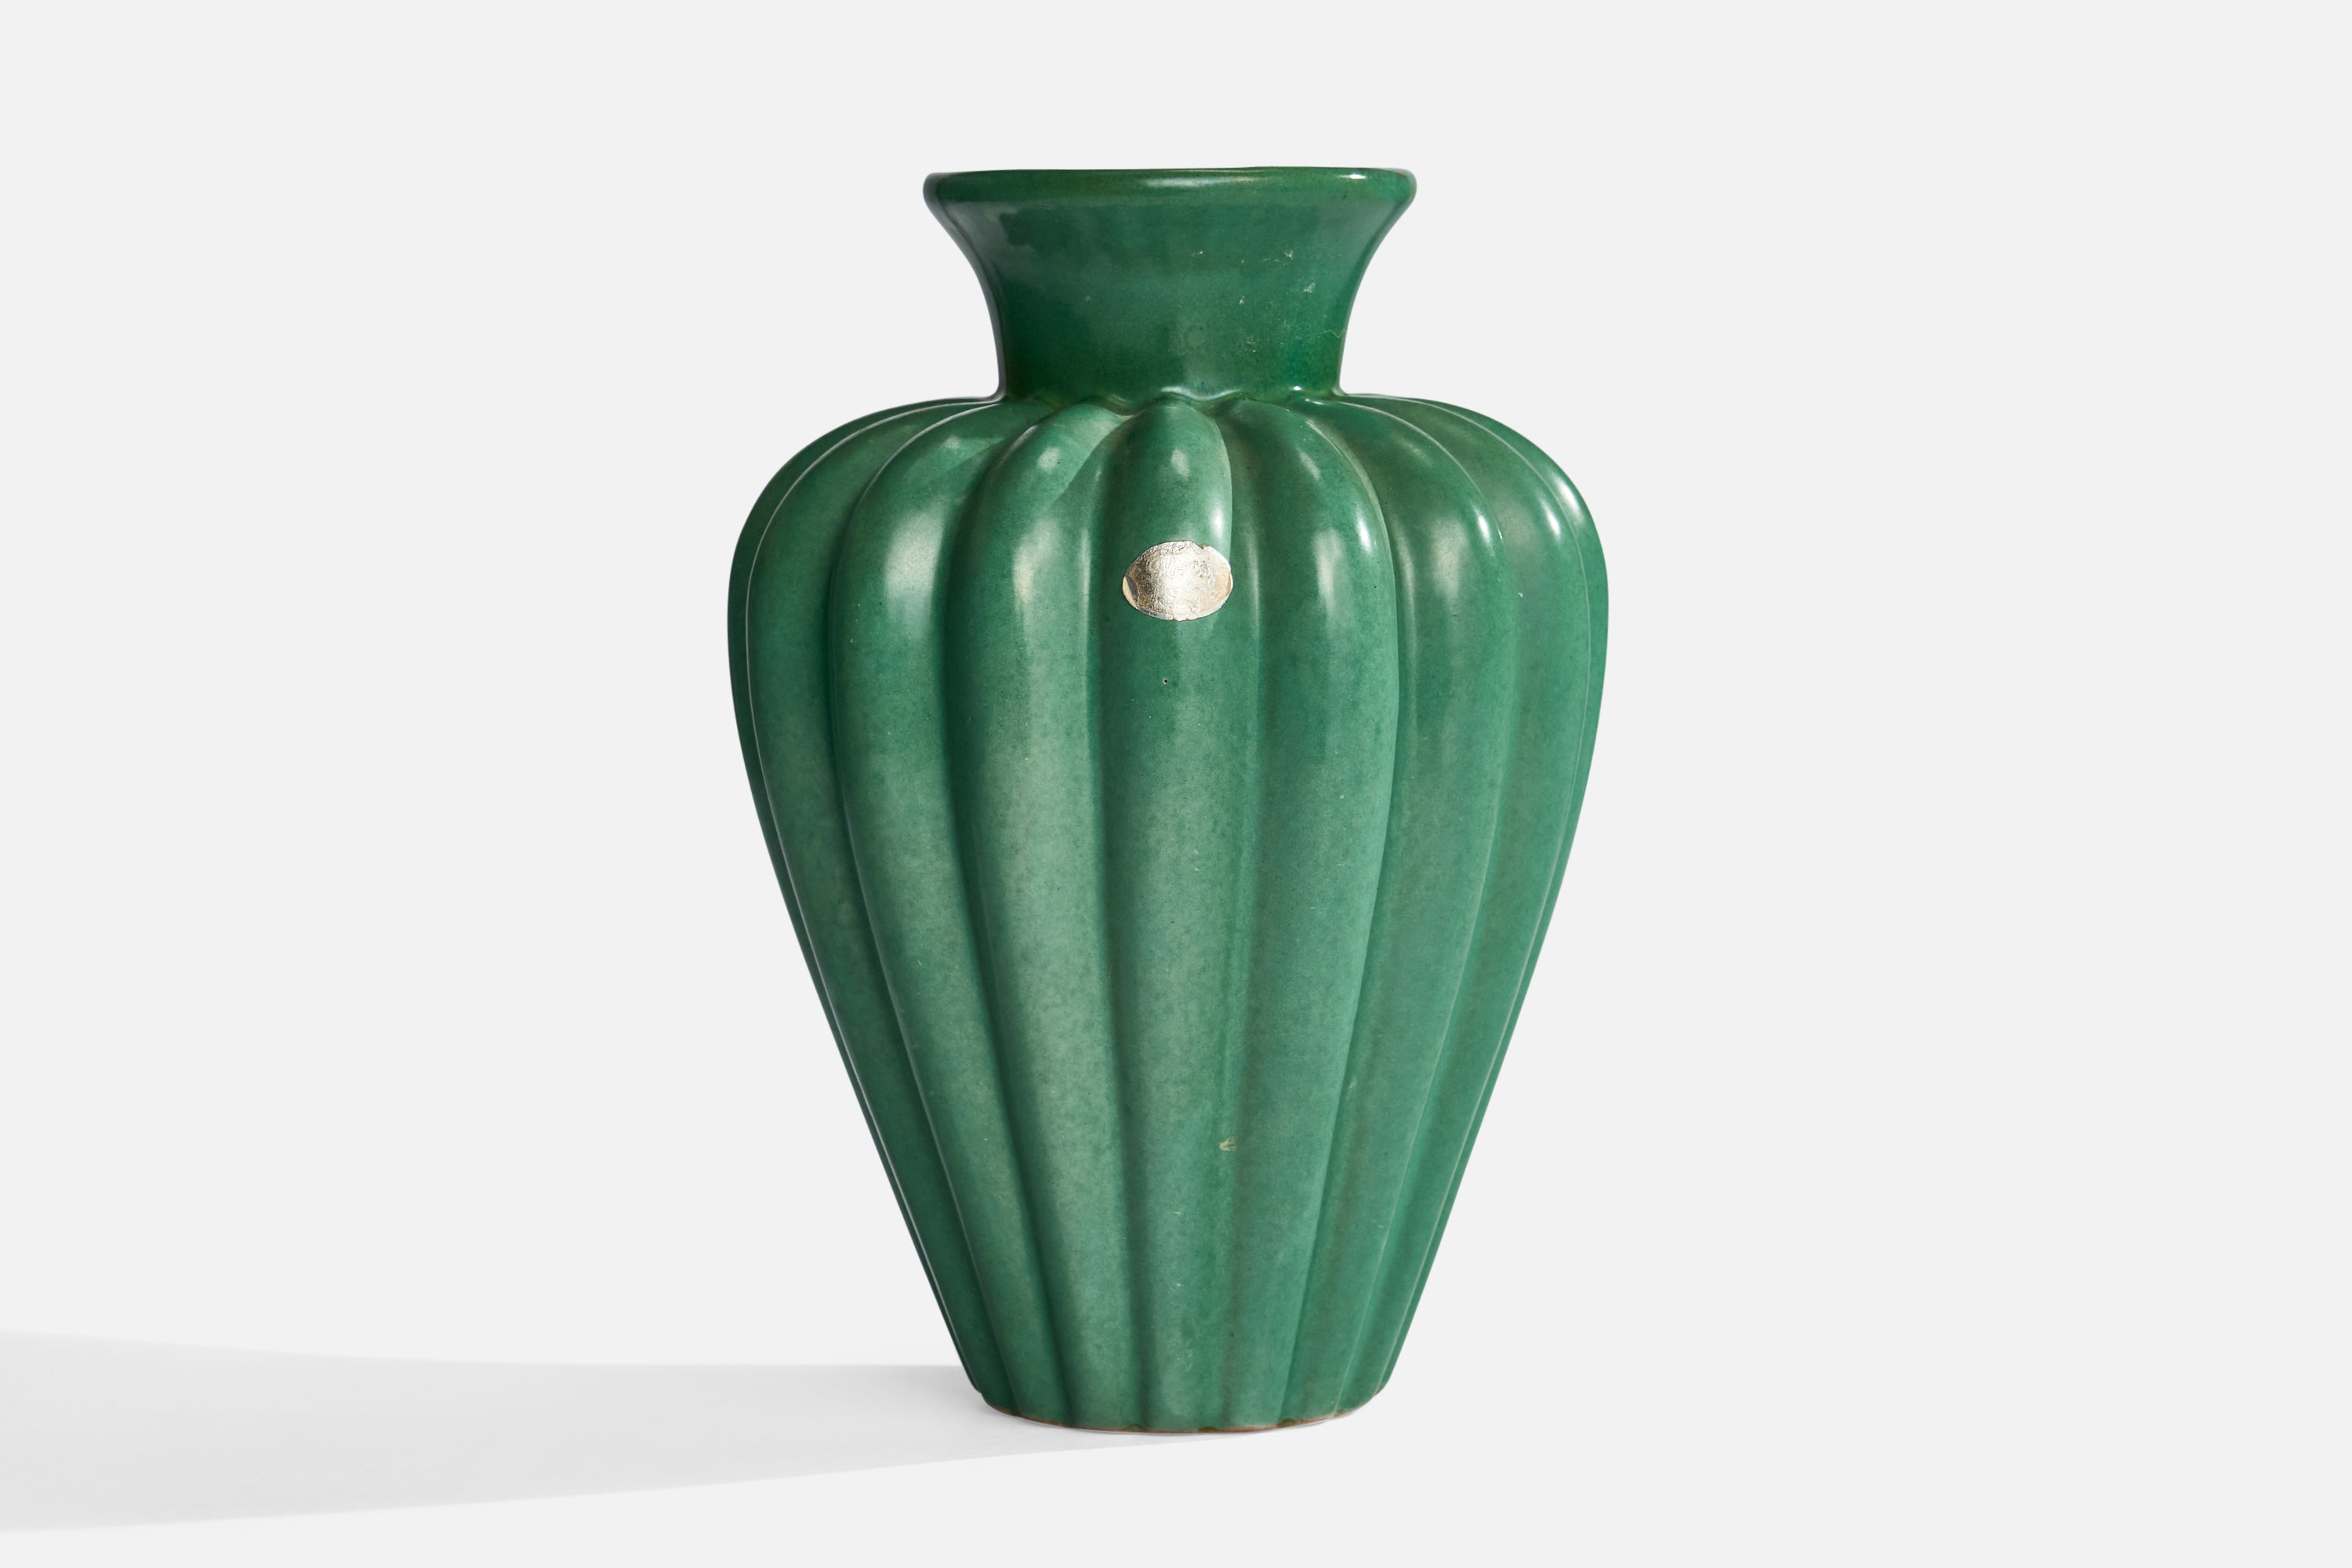 A green-glazed fluted earthenware vase, designed and produced by Upsala Ekeby, Sweden, 1930s.